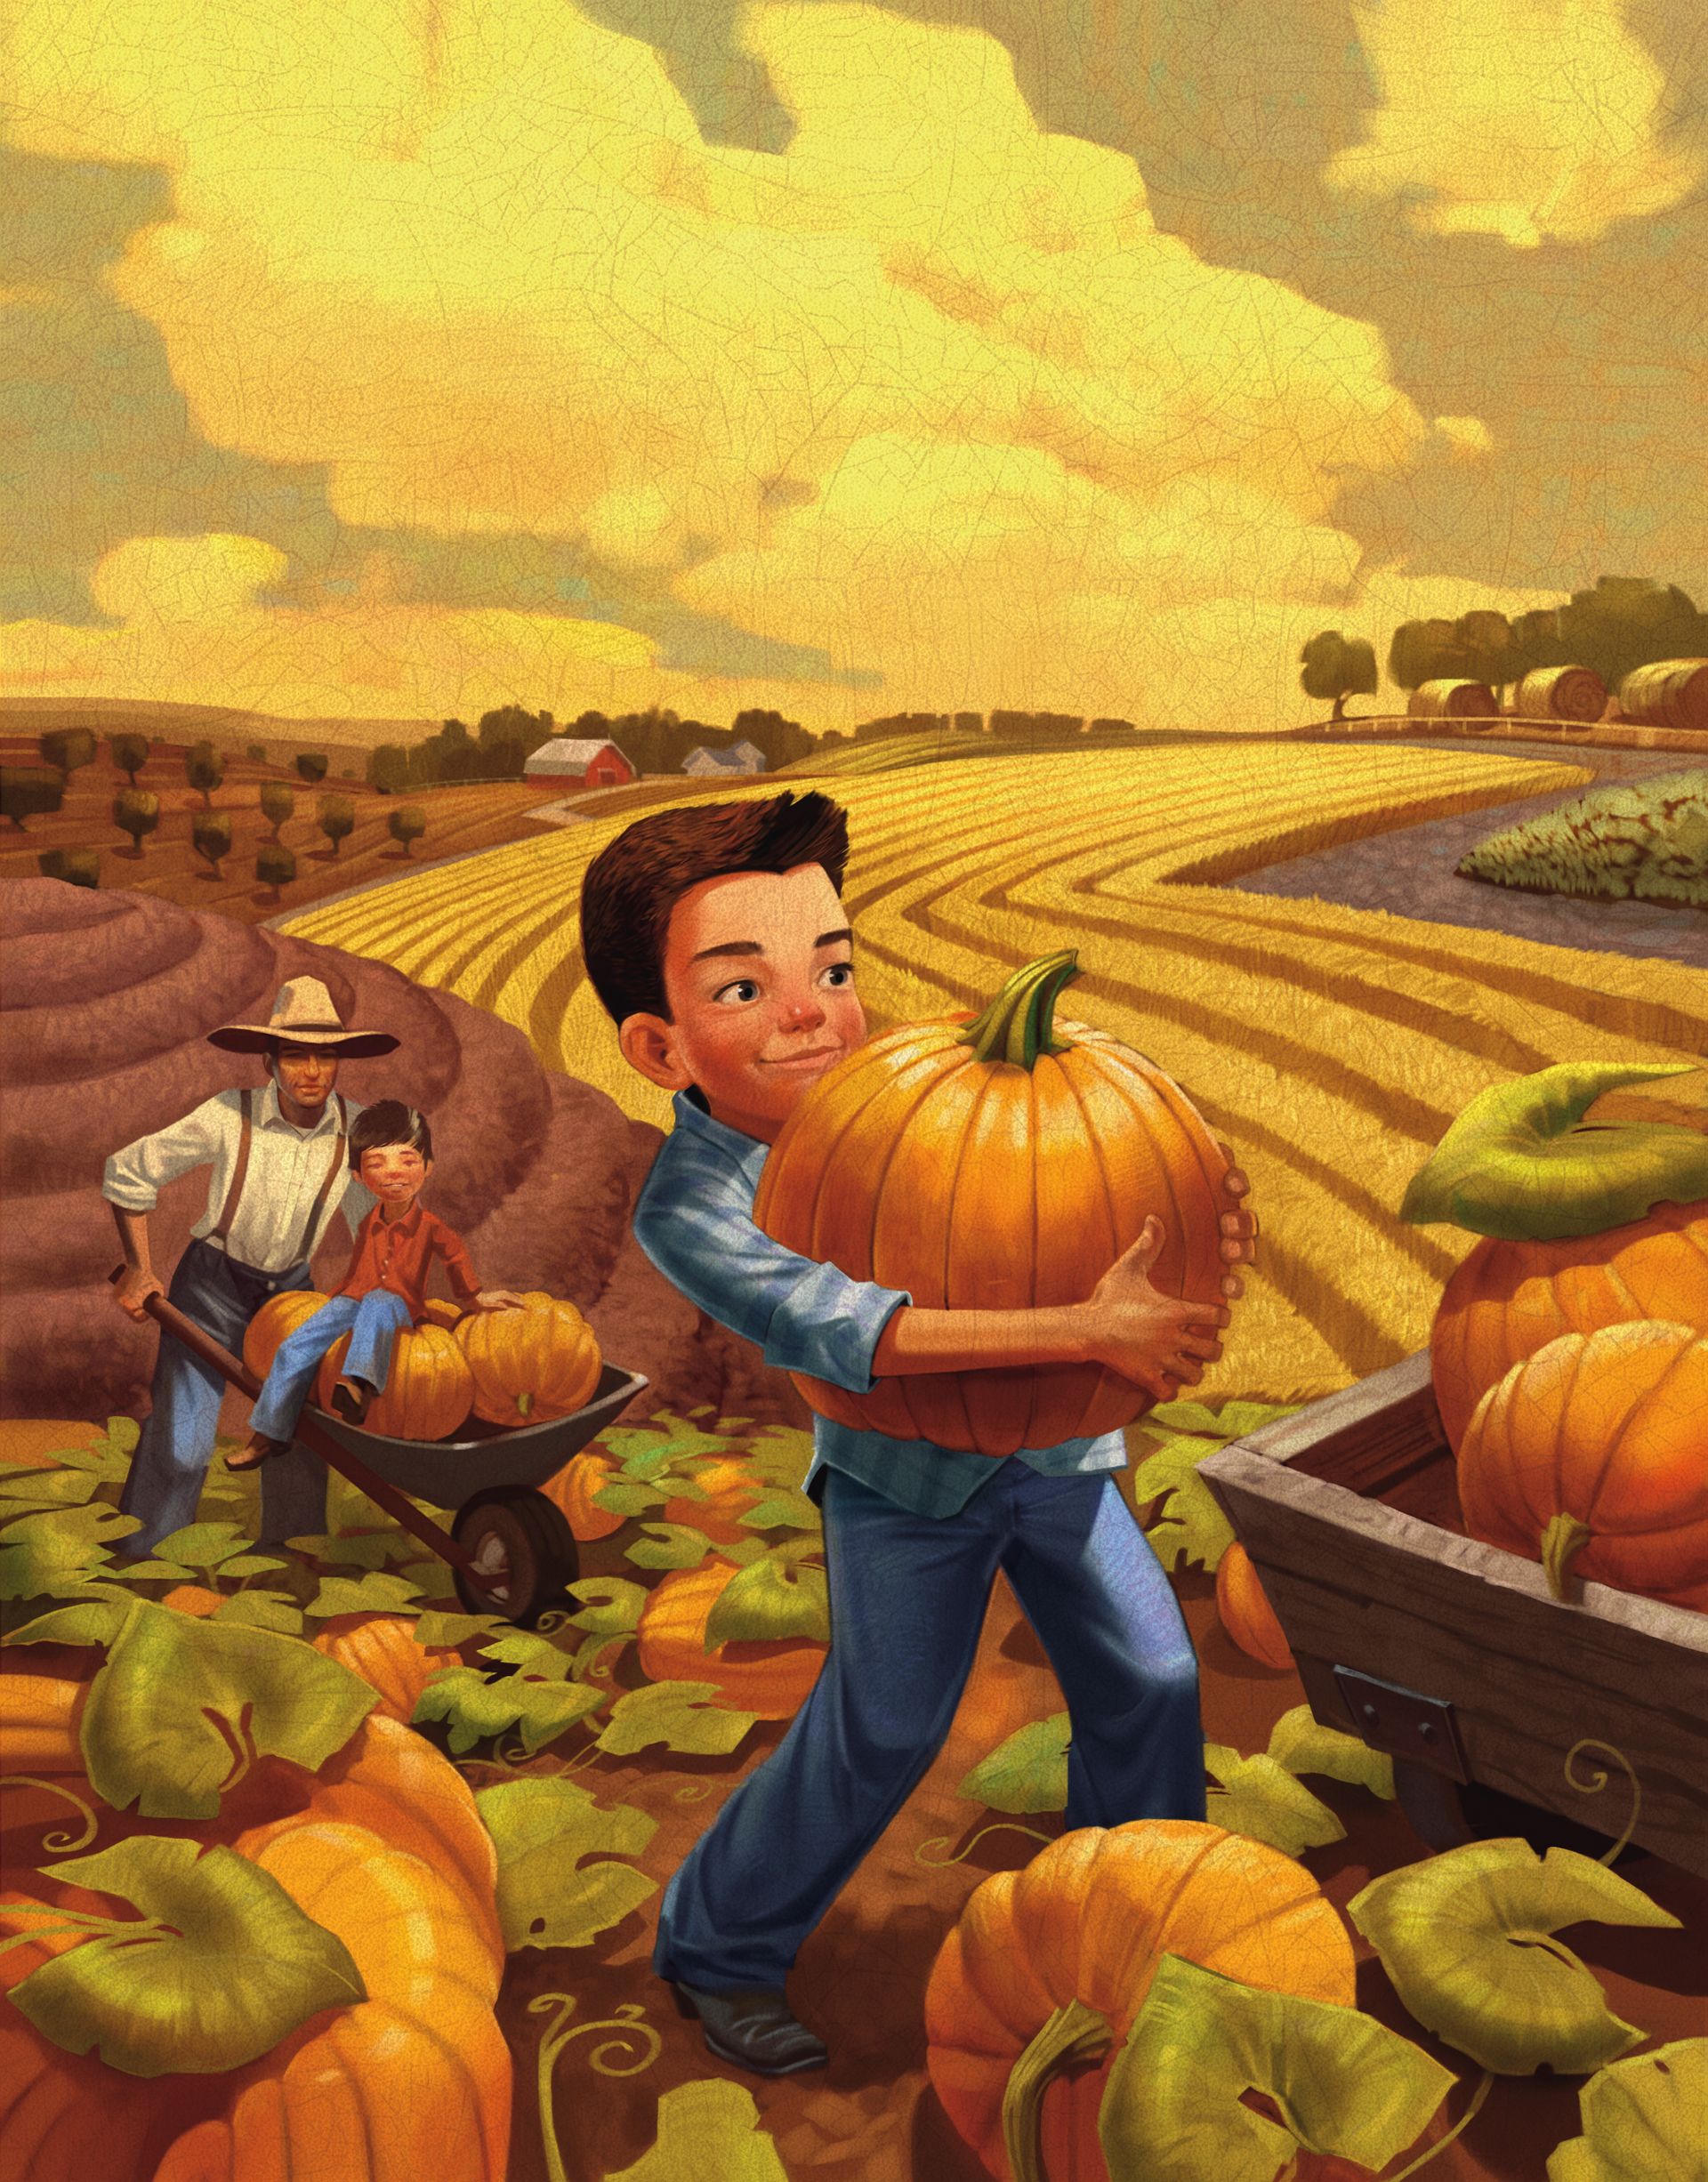 A boy in a pumpkin patch carries a pumpkin to a wheelbarrow nearby.